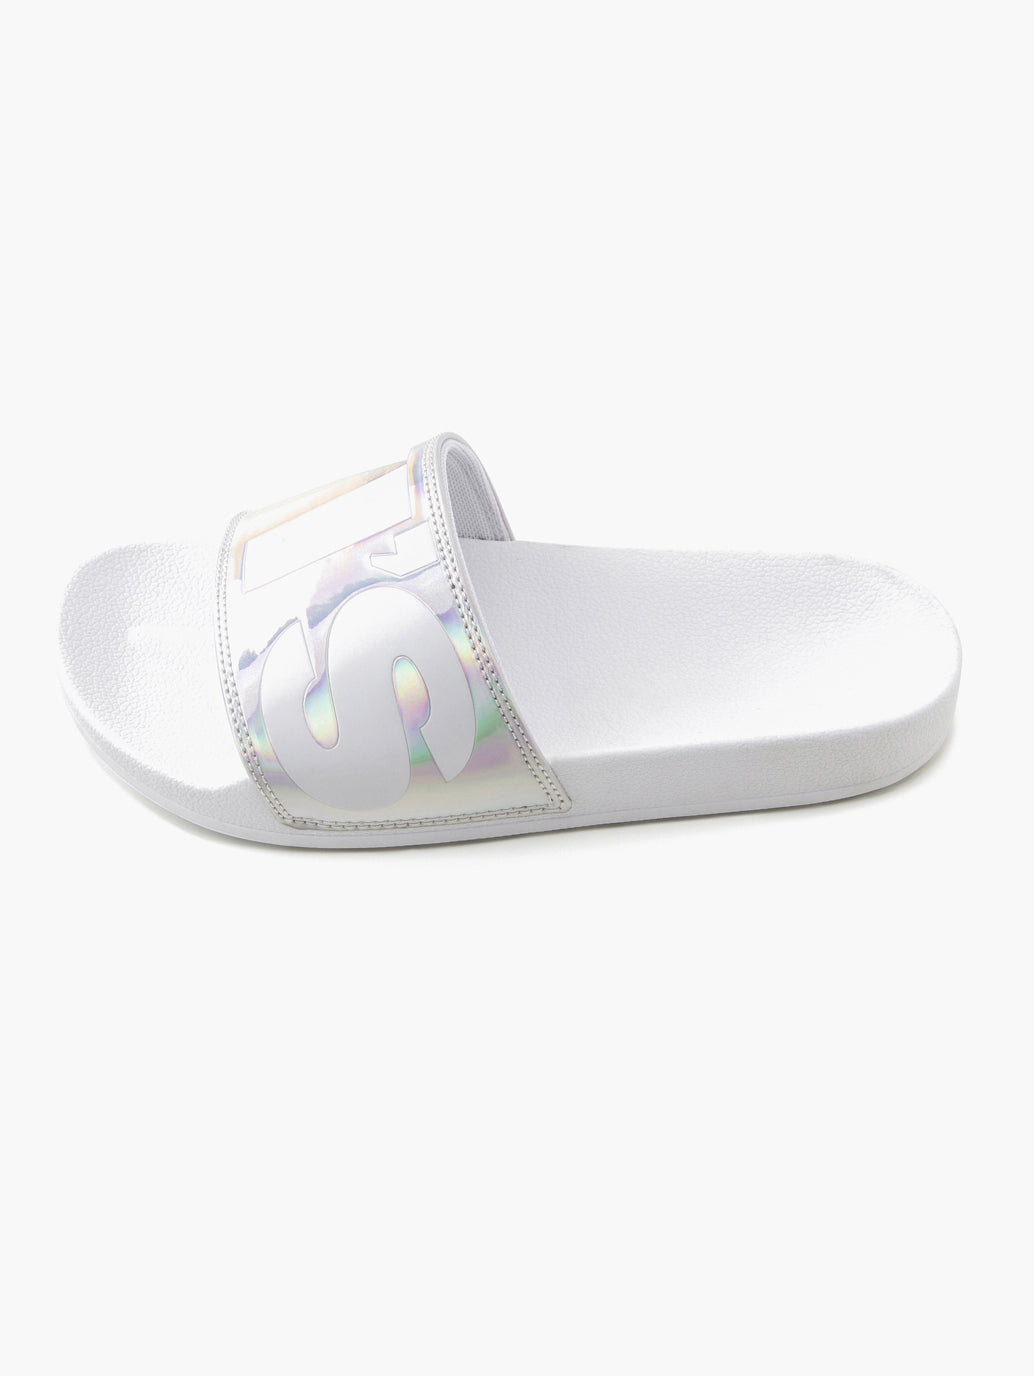 Women's White & Silver Casual Slides